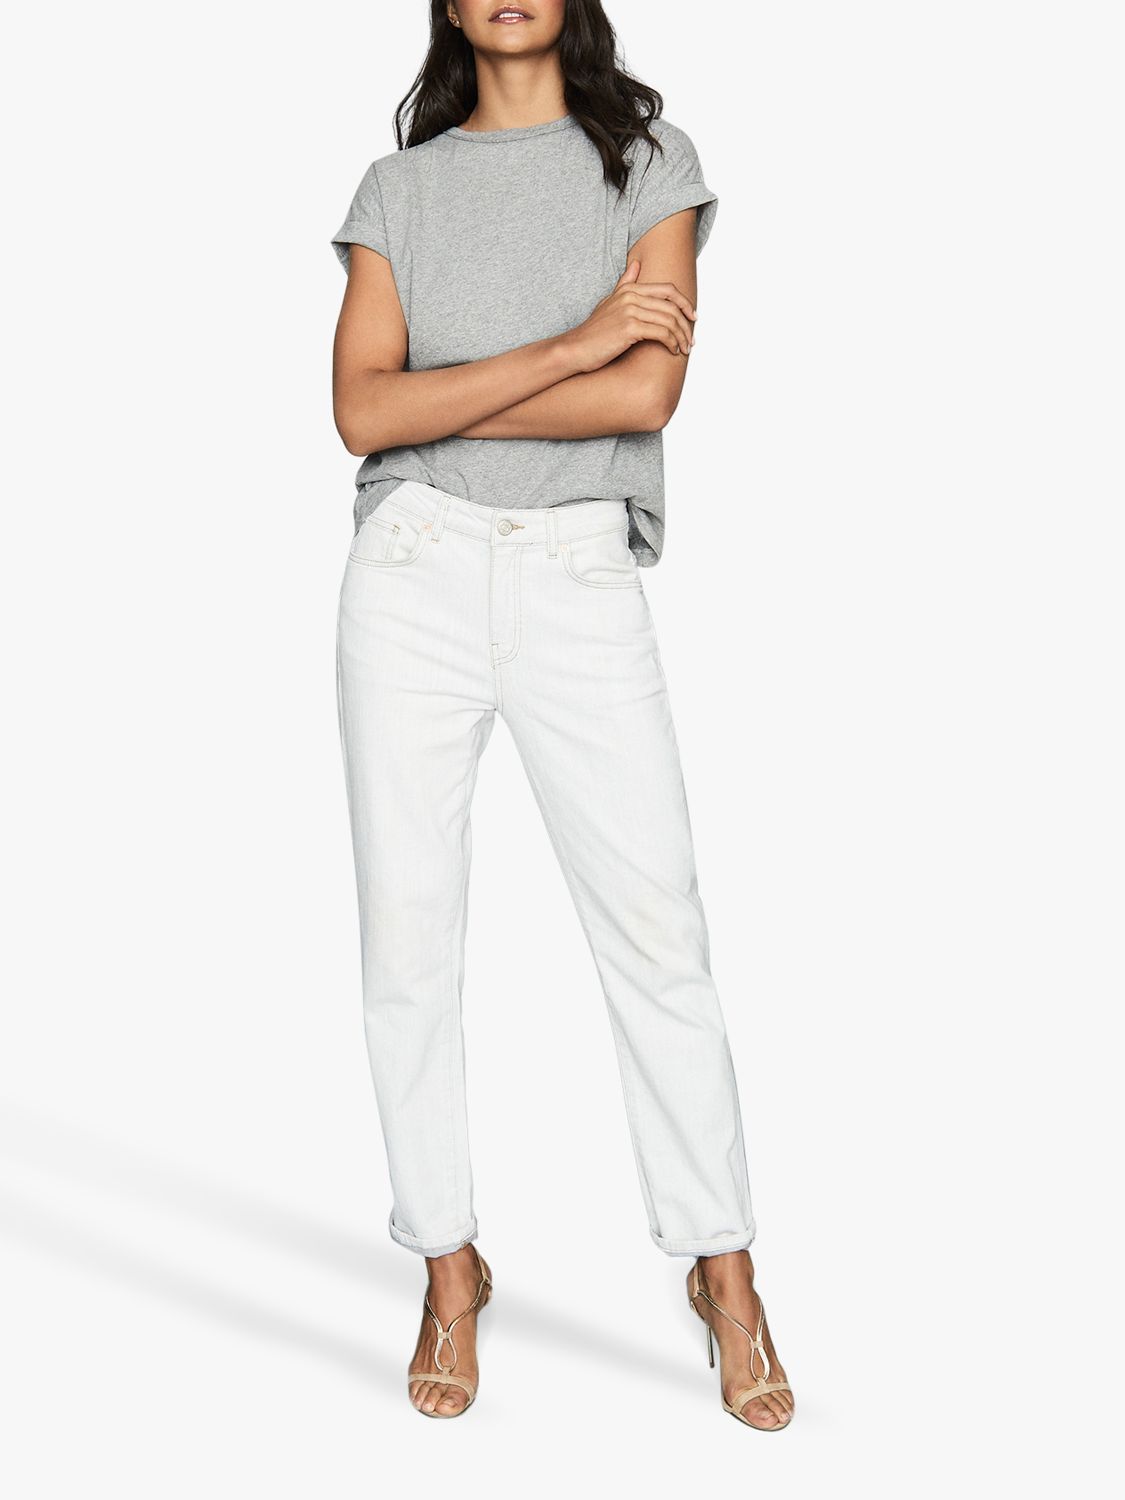 Reiss Tereza Cotton Jersey T-Shirt, Grey Marl, XS